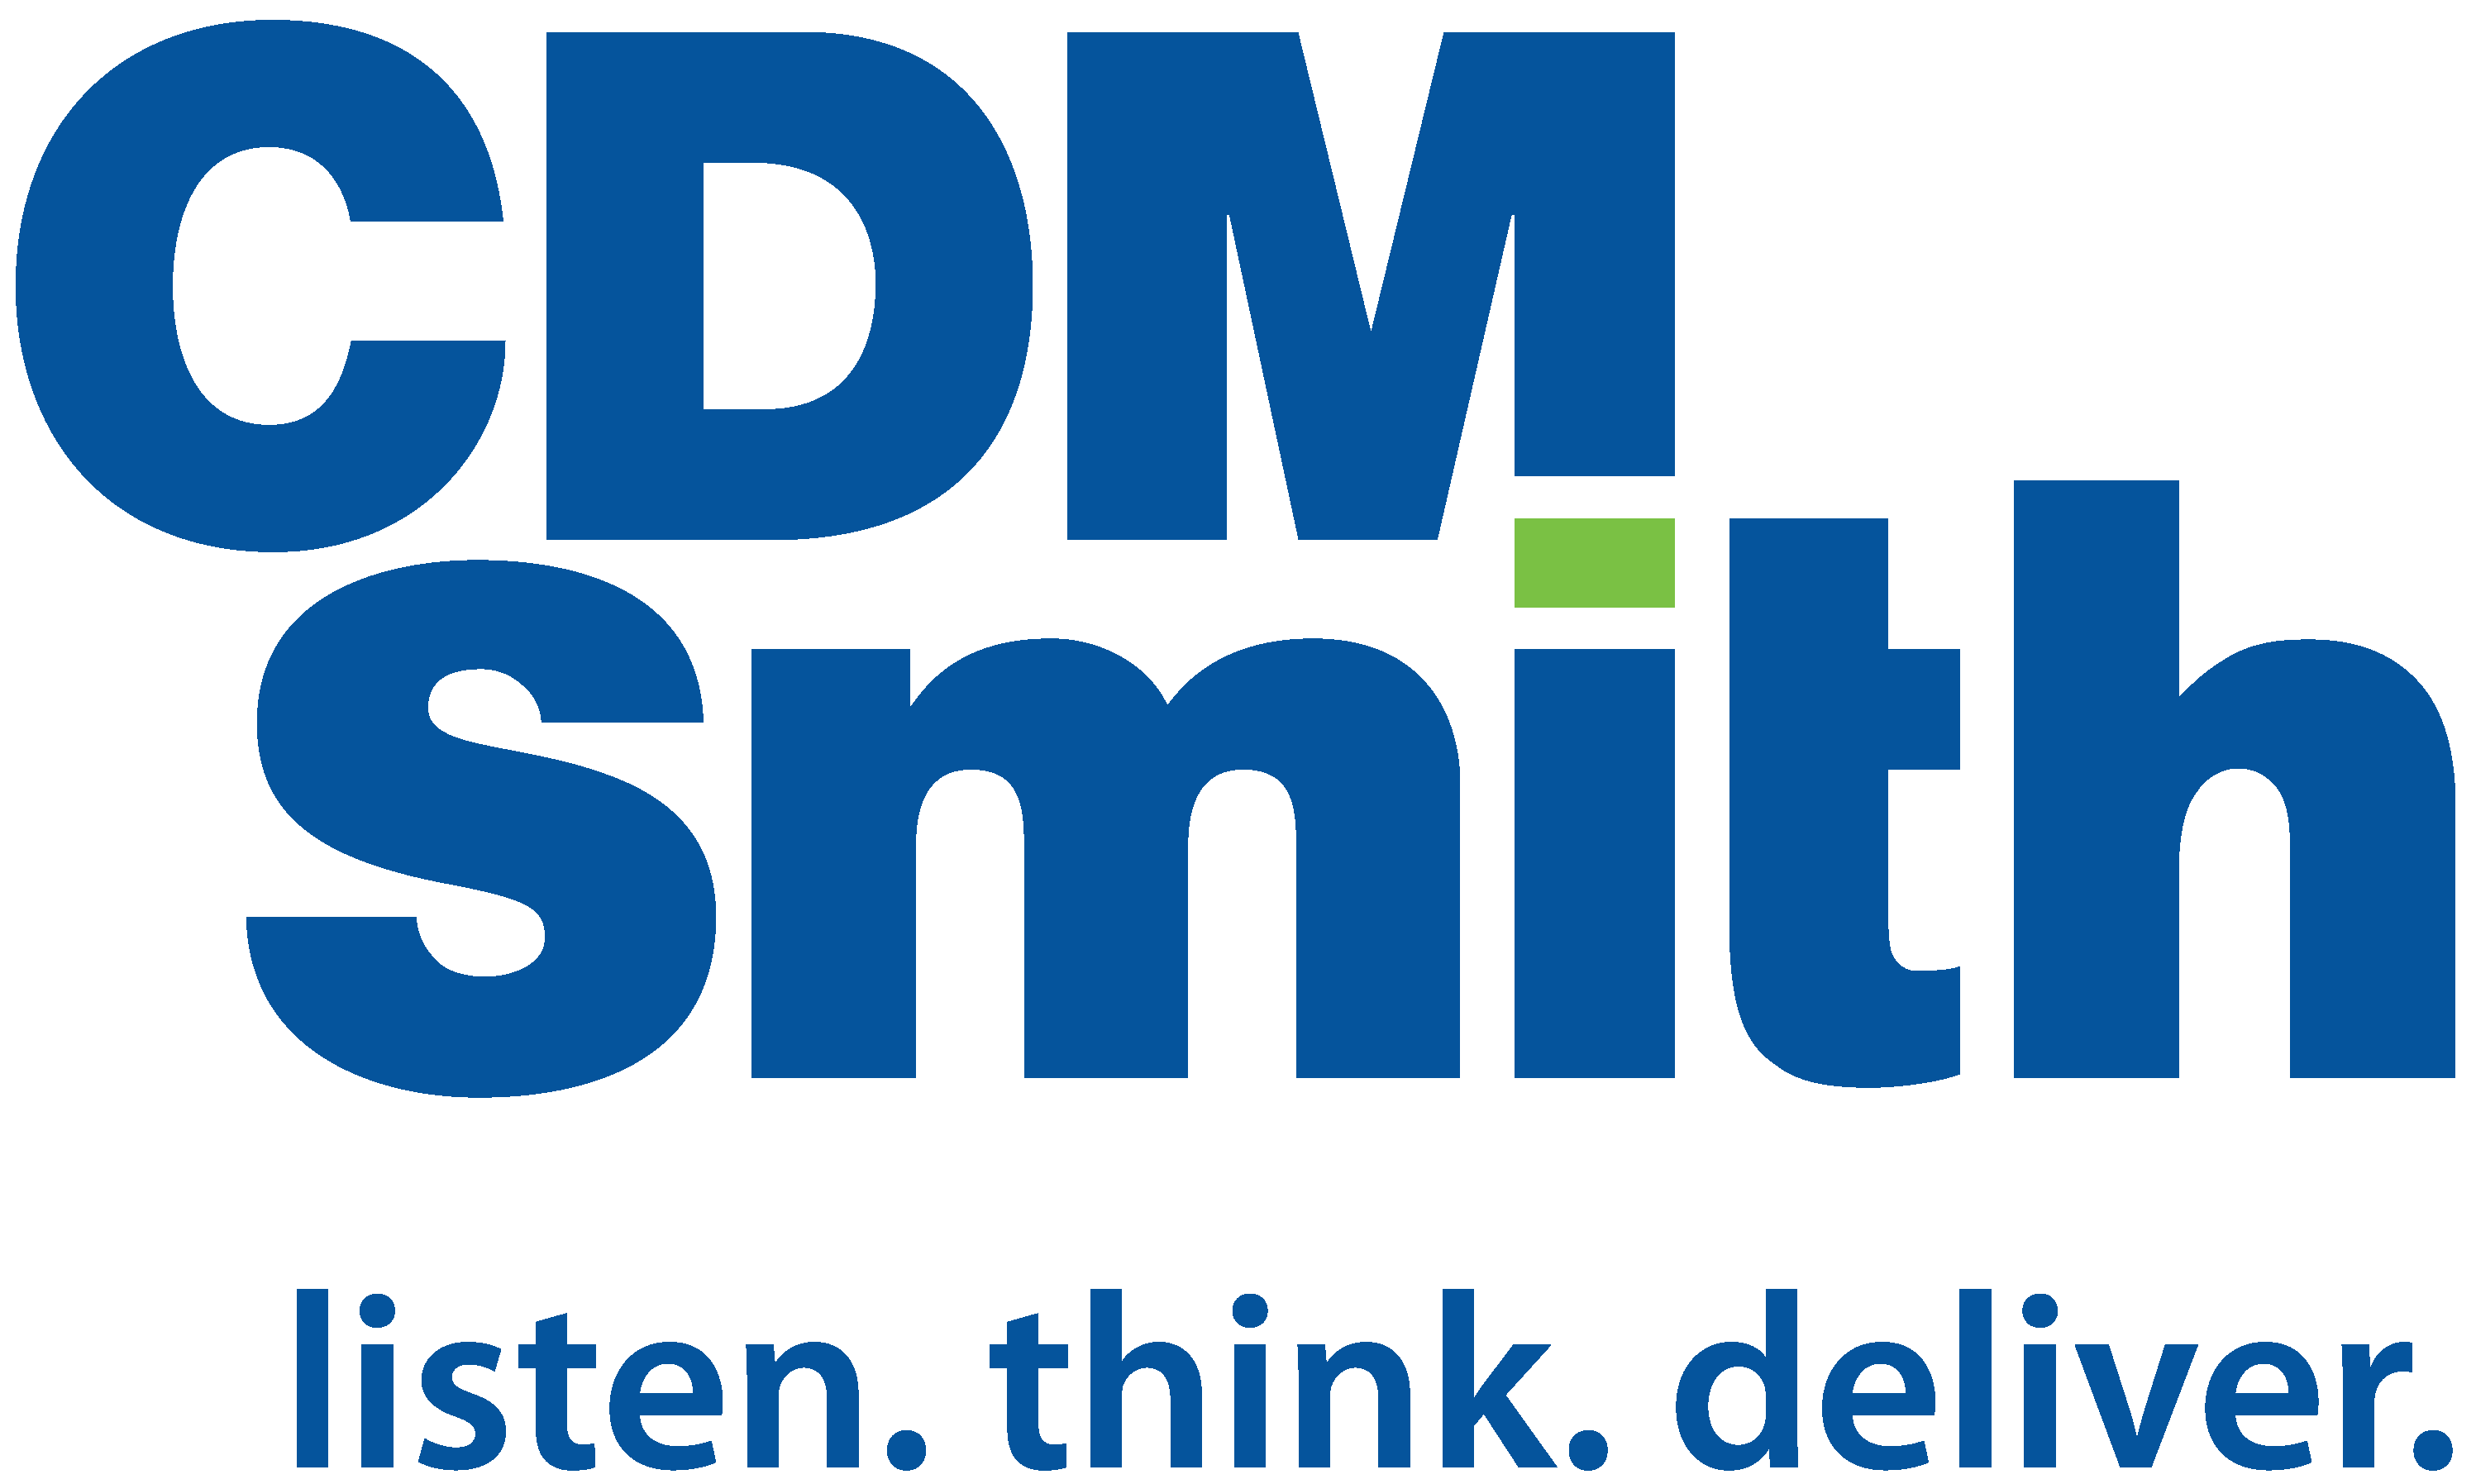 CDM Smith